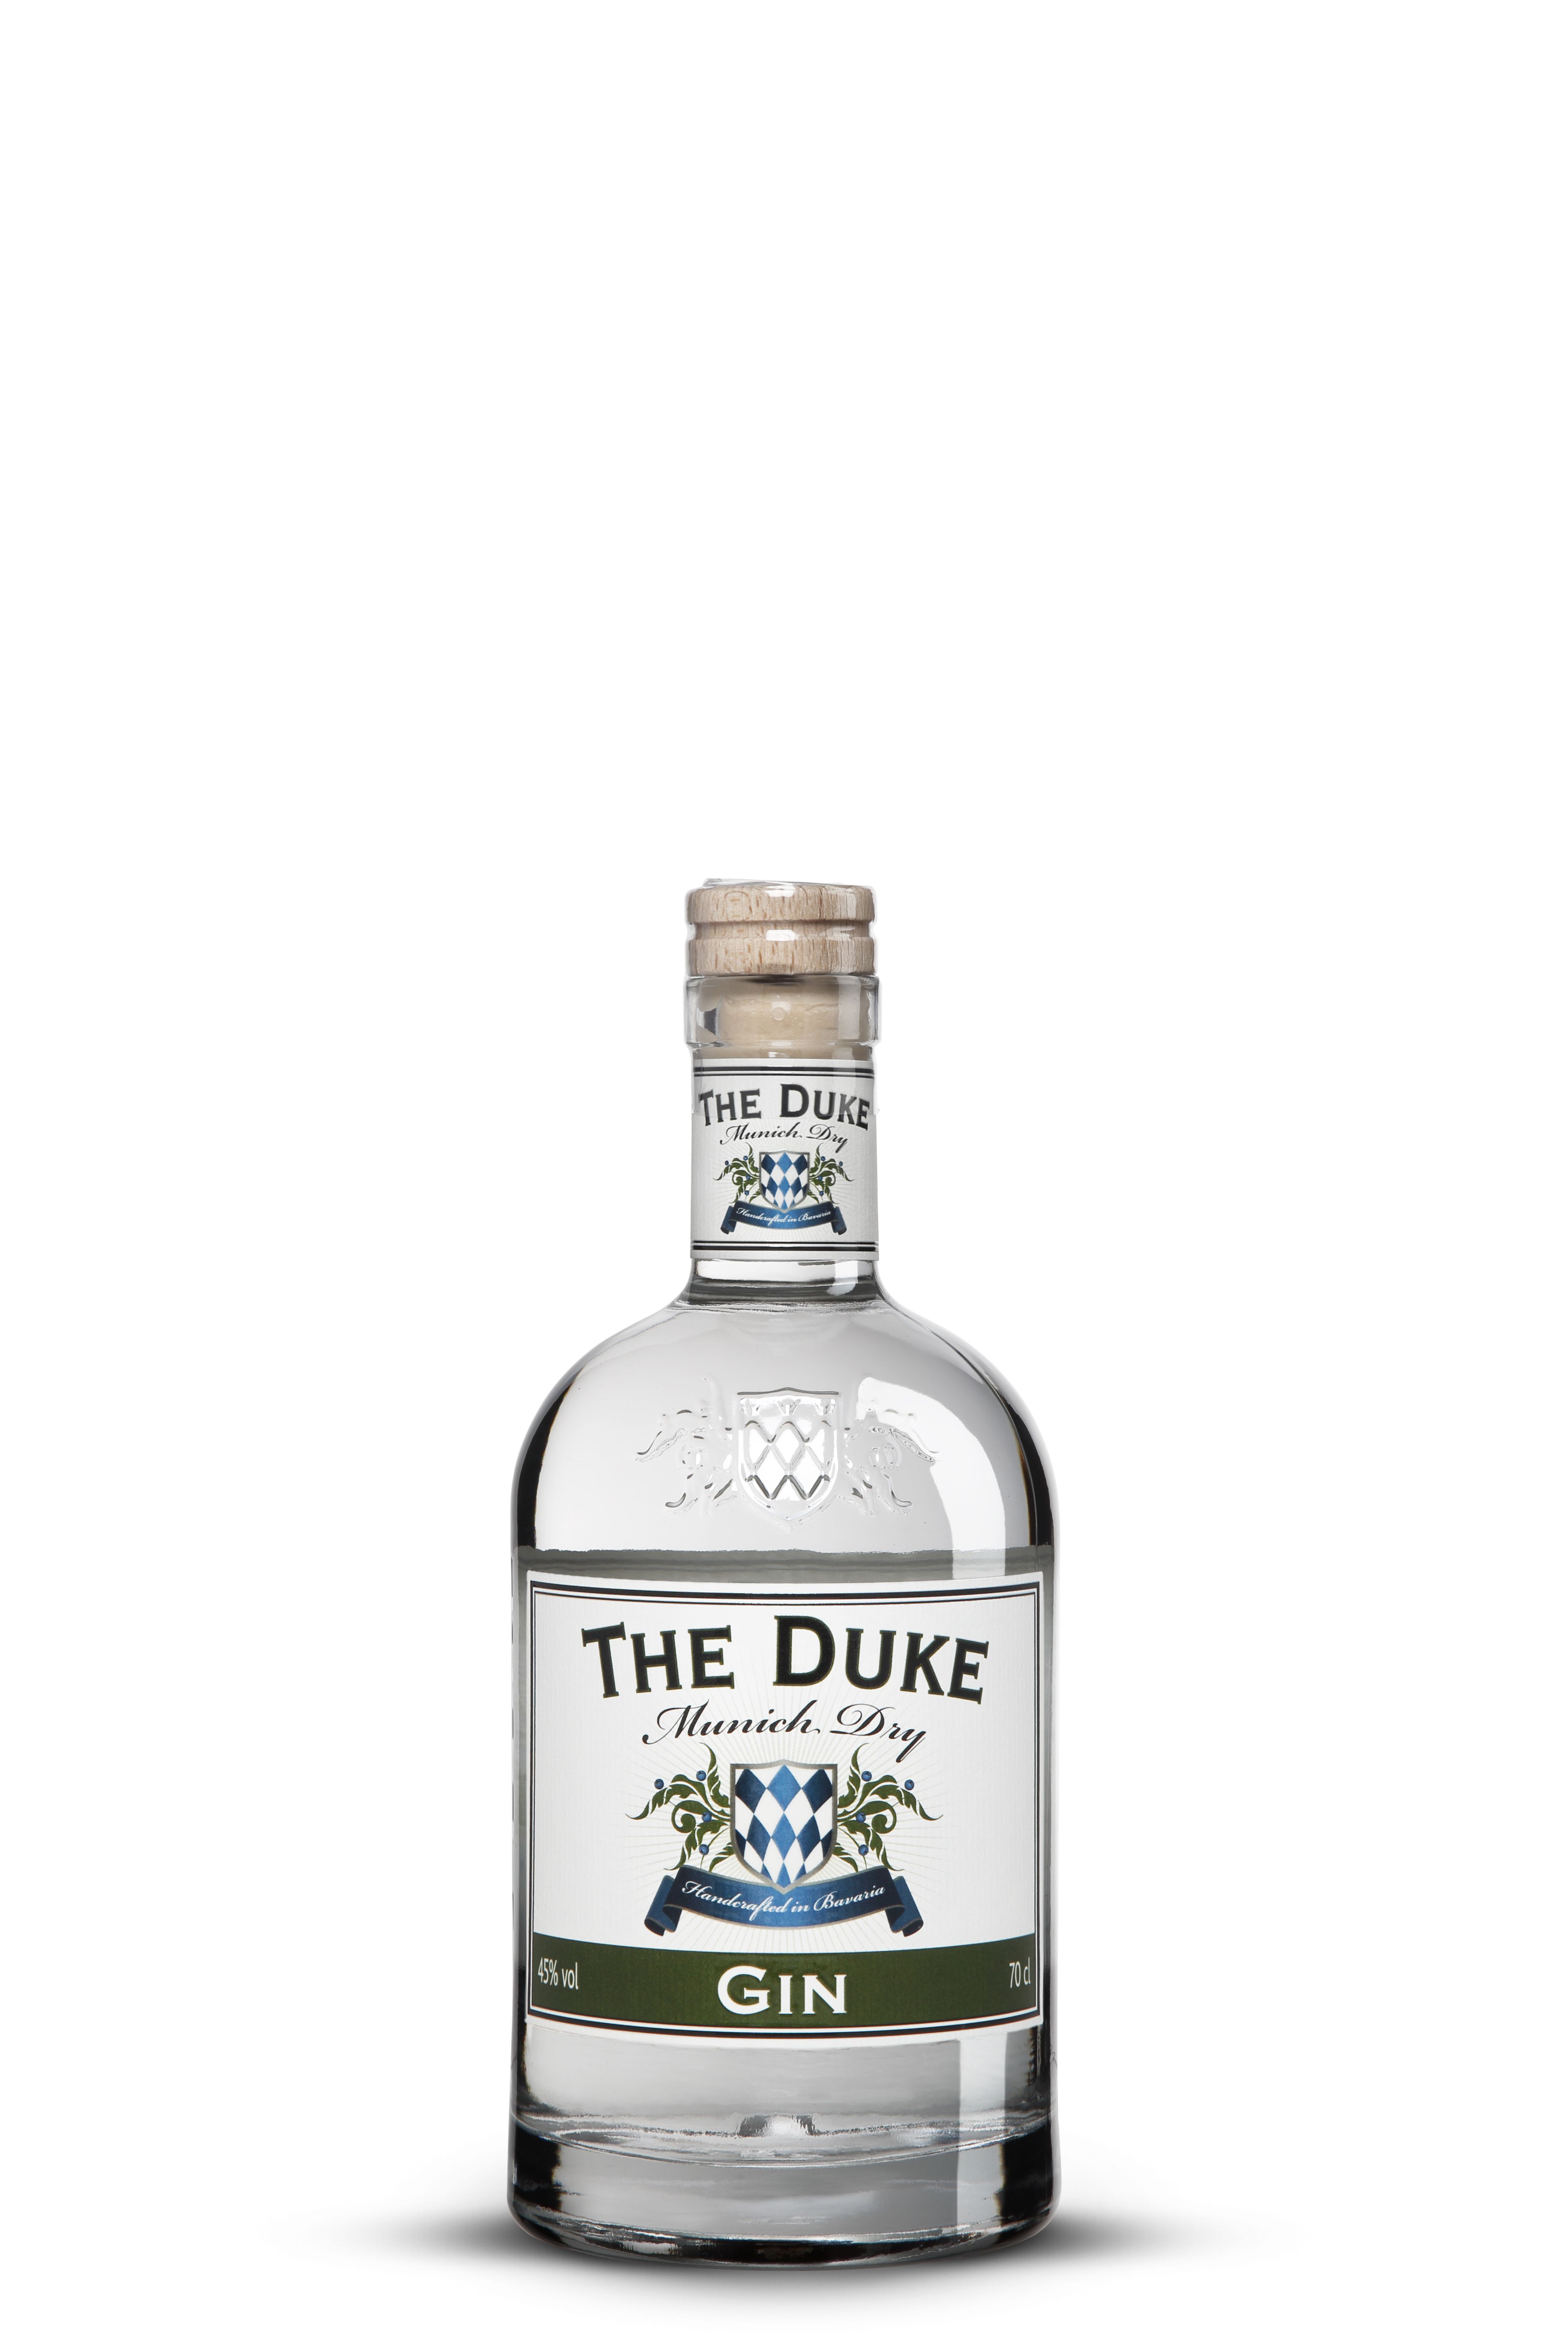 THE DUKE Munich Dry Gin